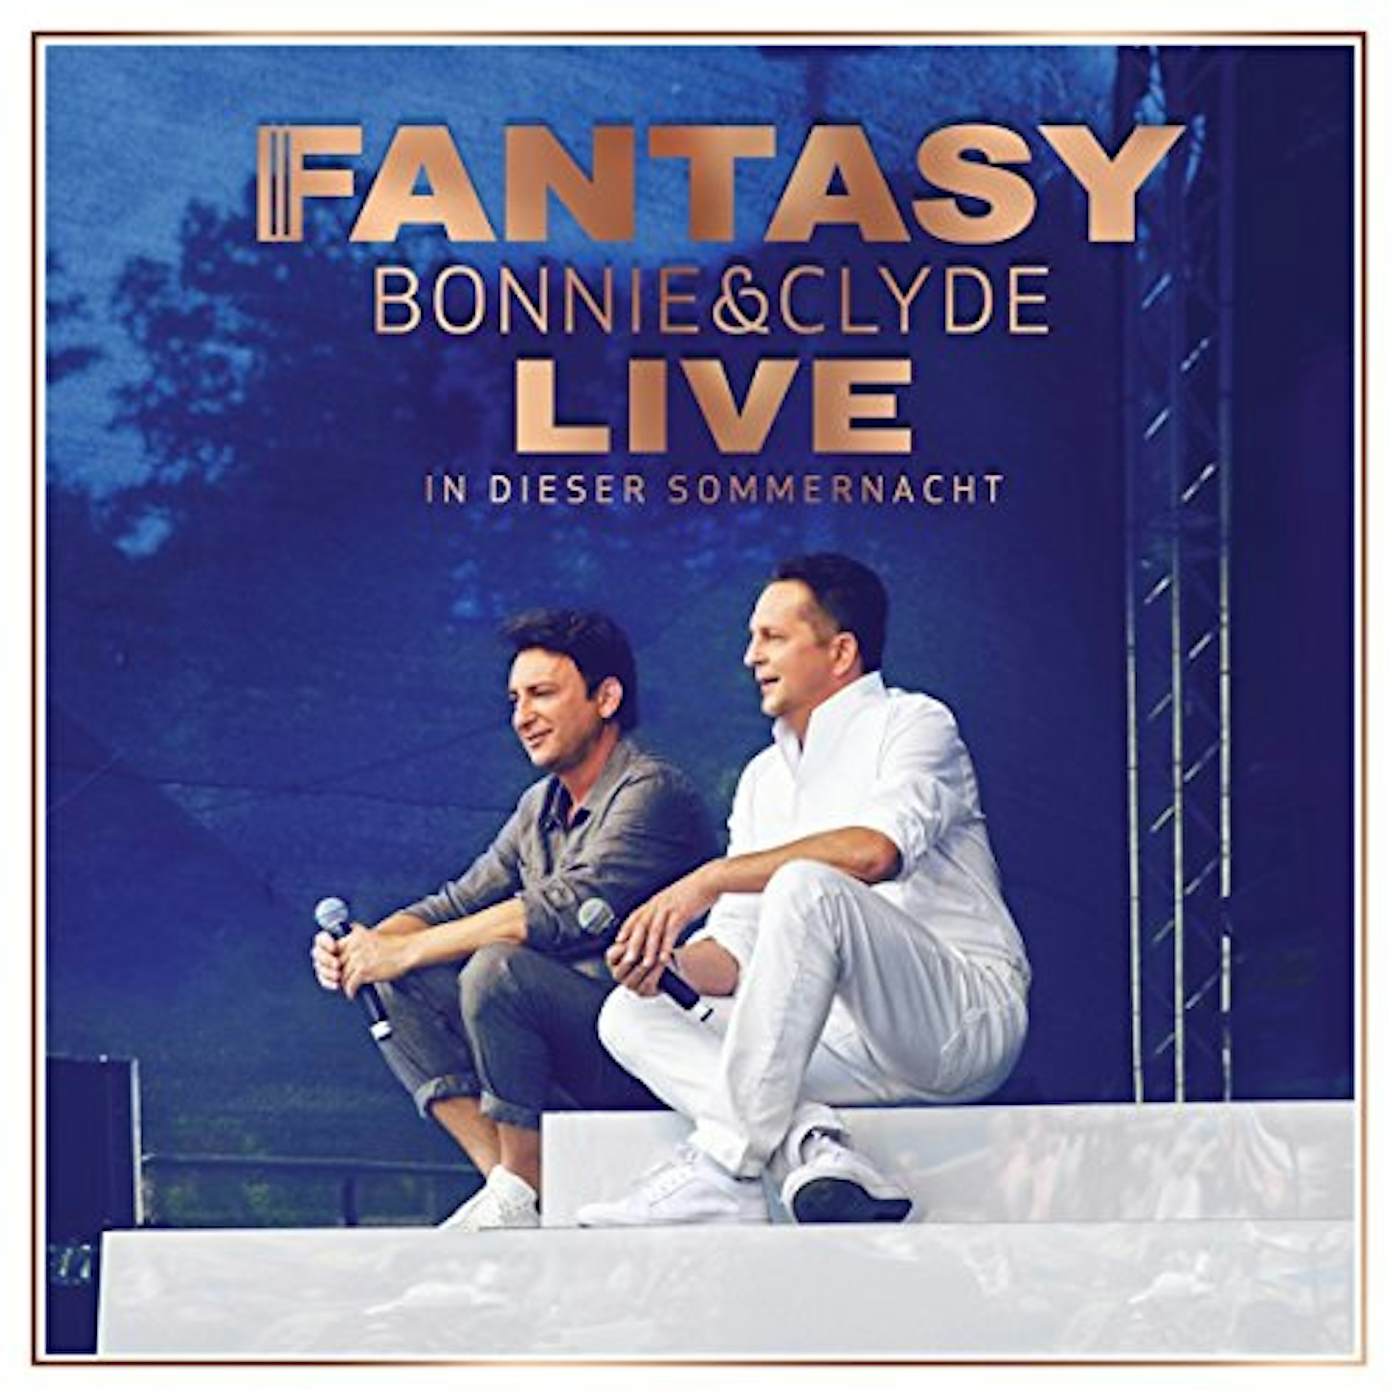 Fantasy BONNIE & CLYDE LIVE: IN DIESER SOMMERNA CD